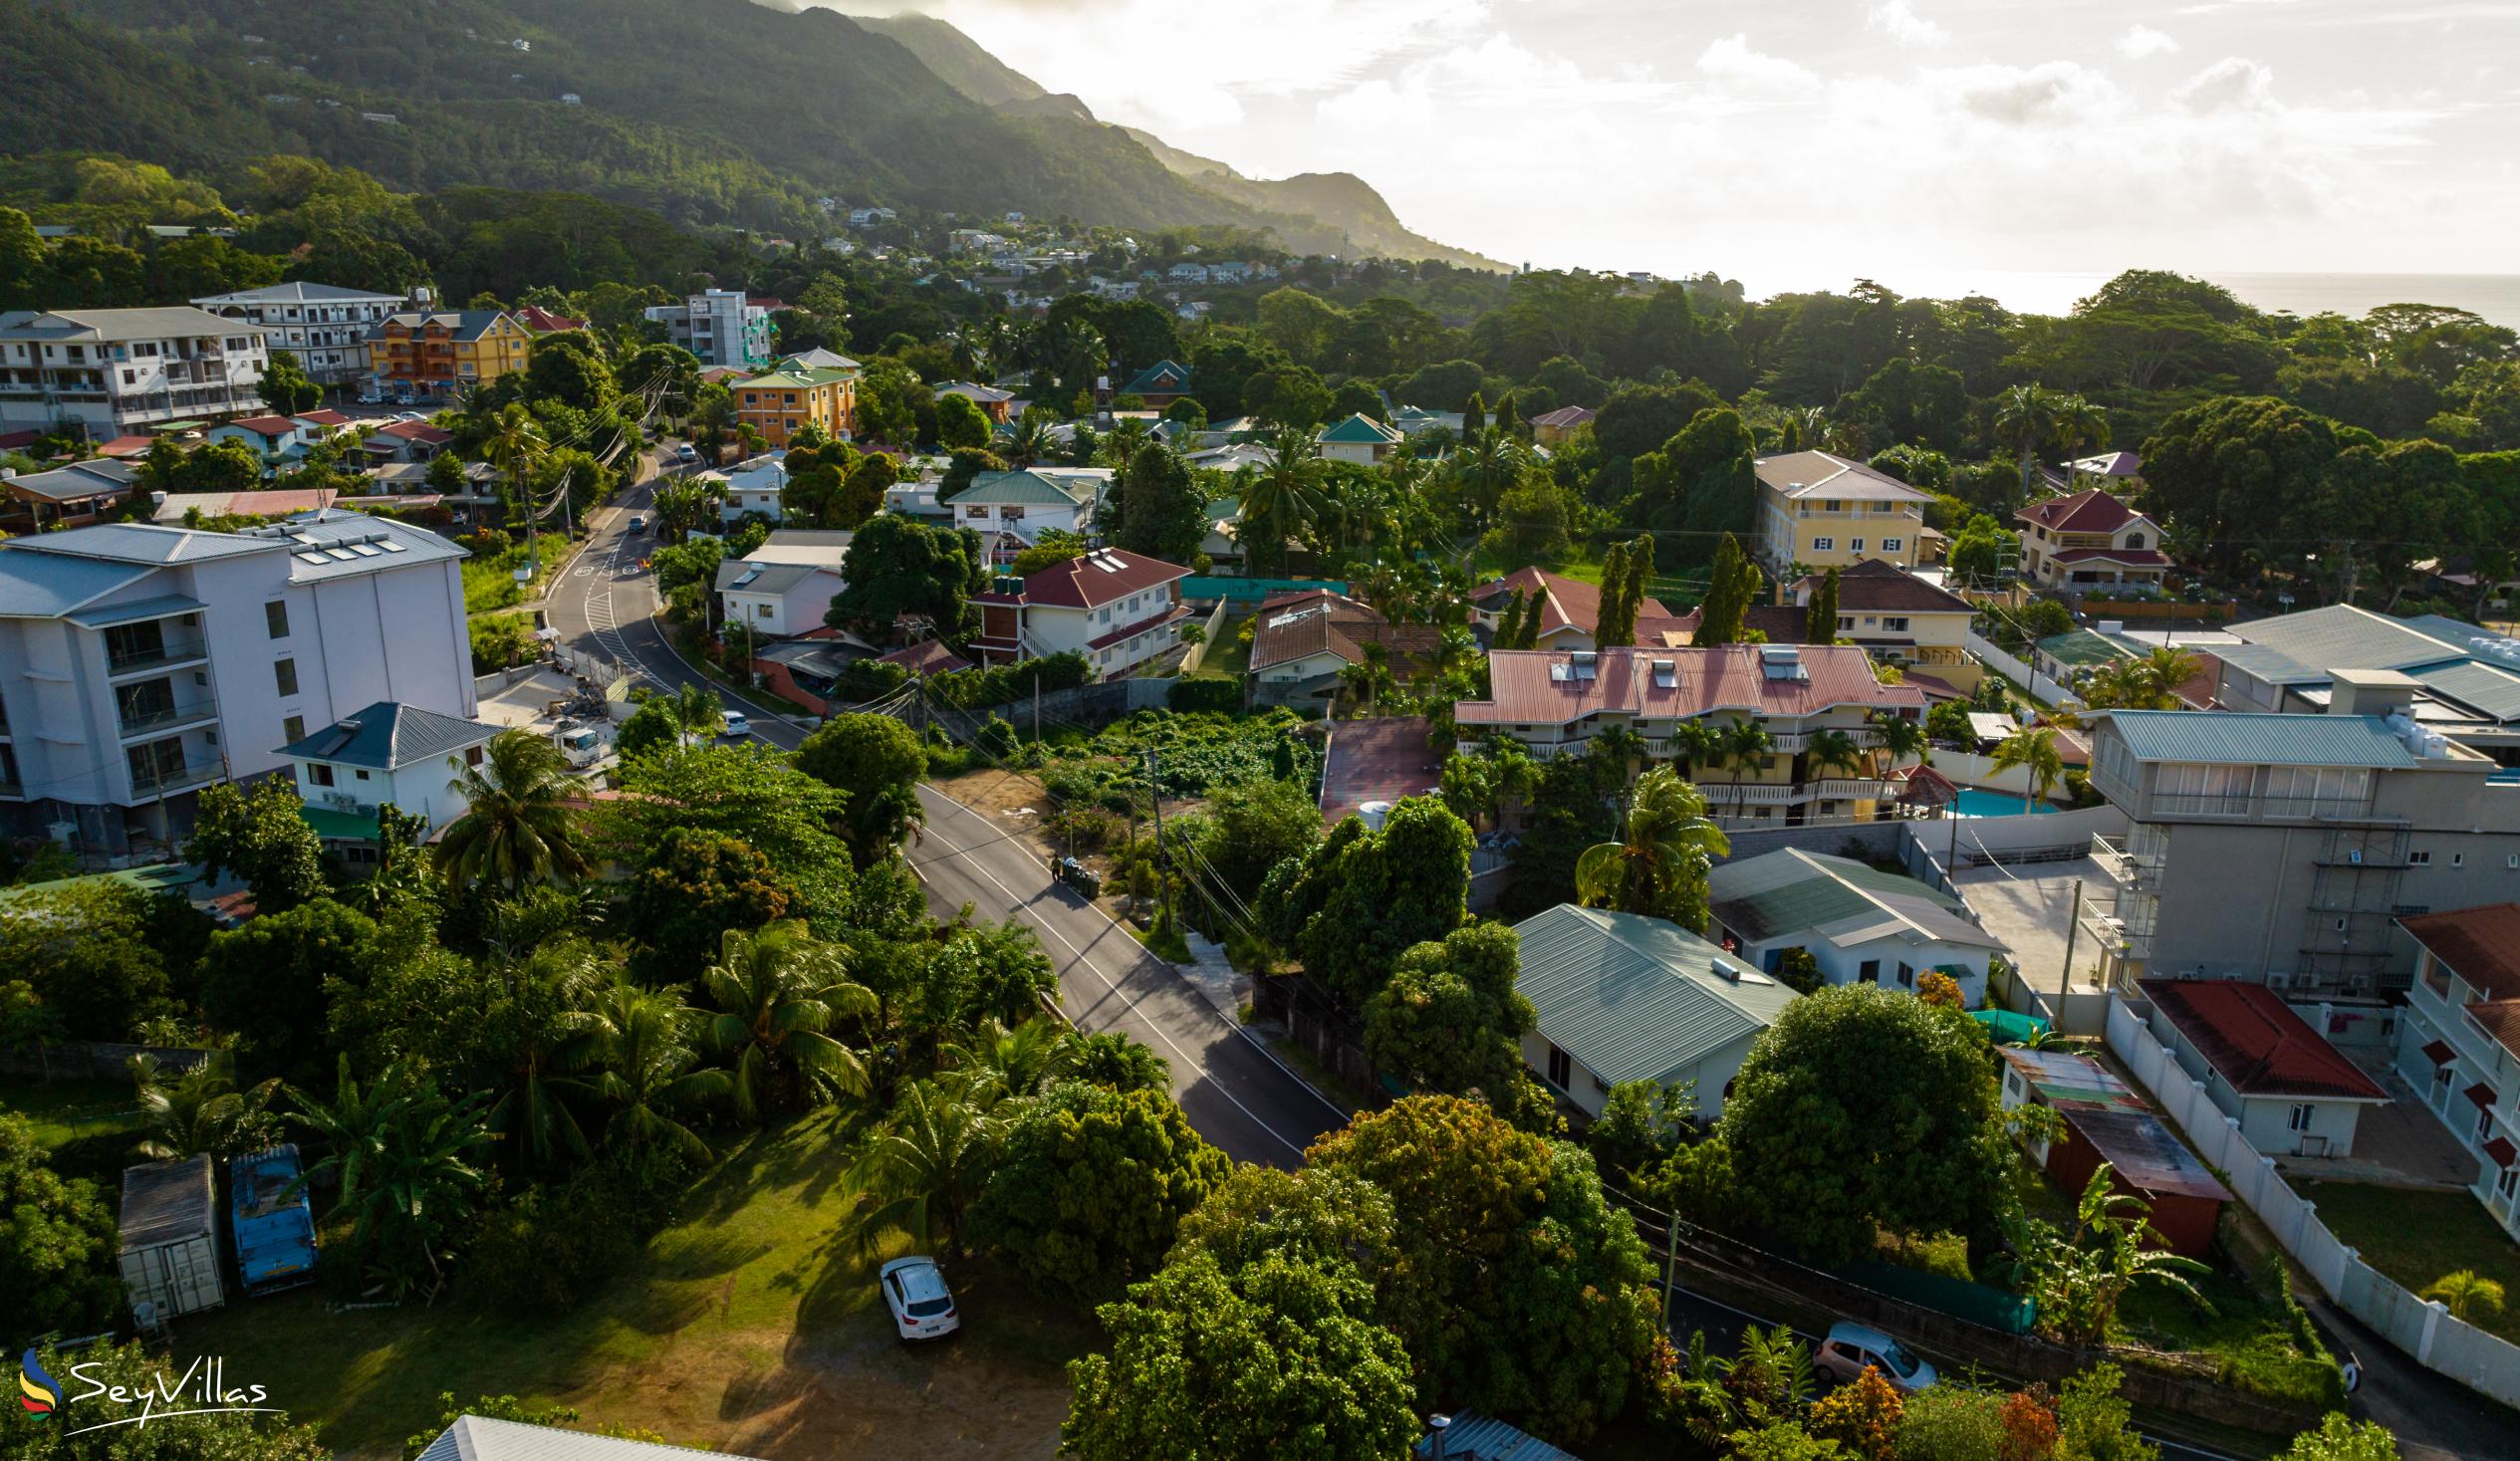 Photo 66: Tropical Hideaway - Location - Mahé (Seychelles)